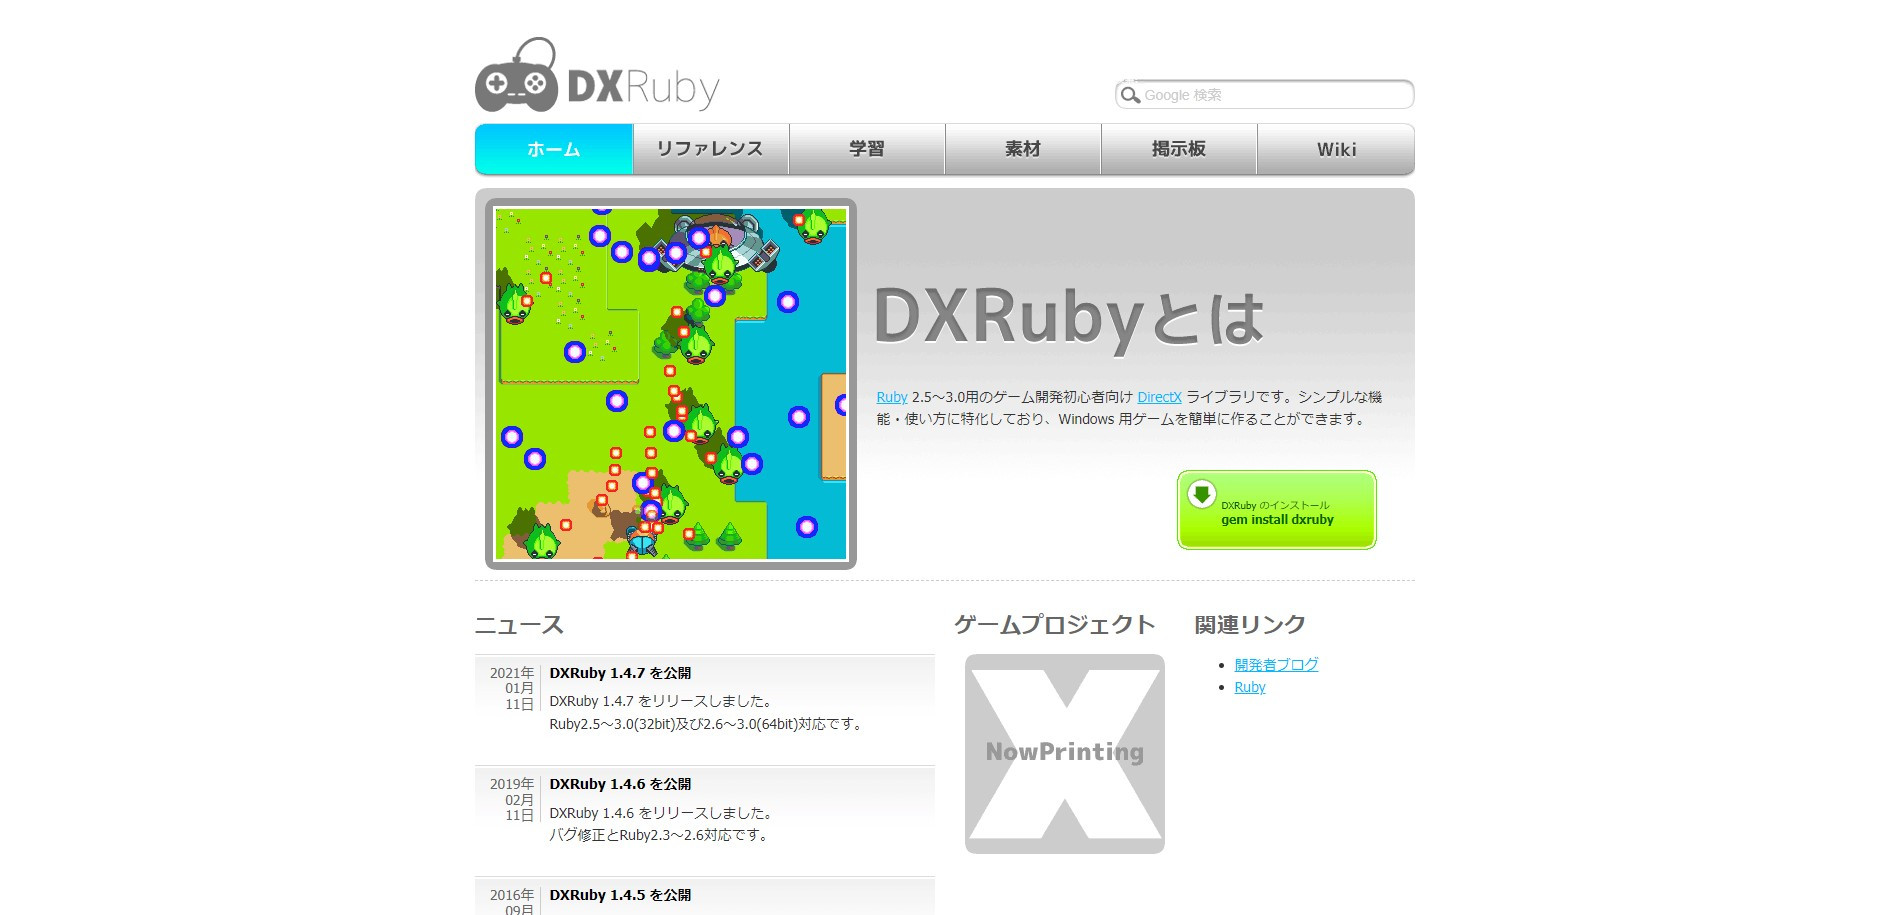 DXRuby